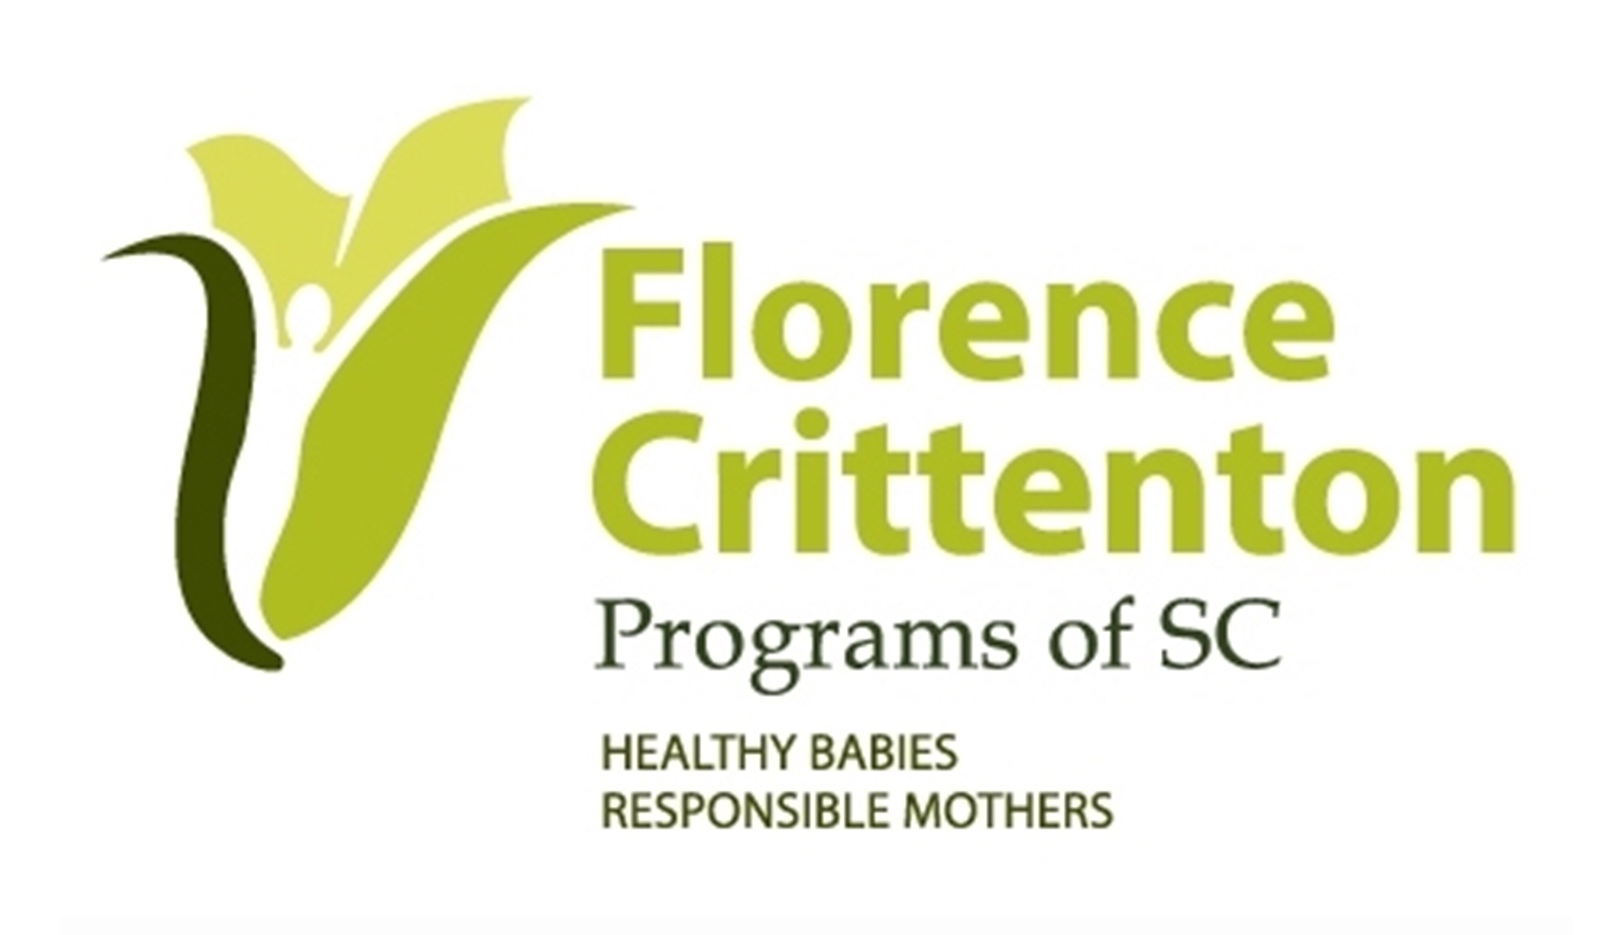 Florence Crittenton Programs of SC